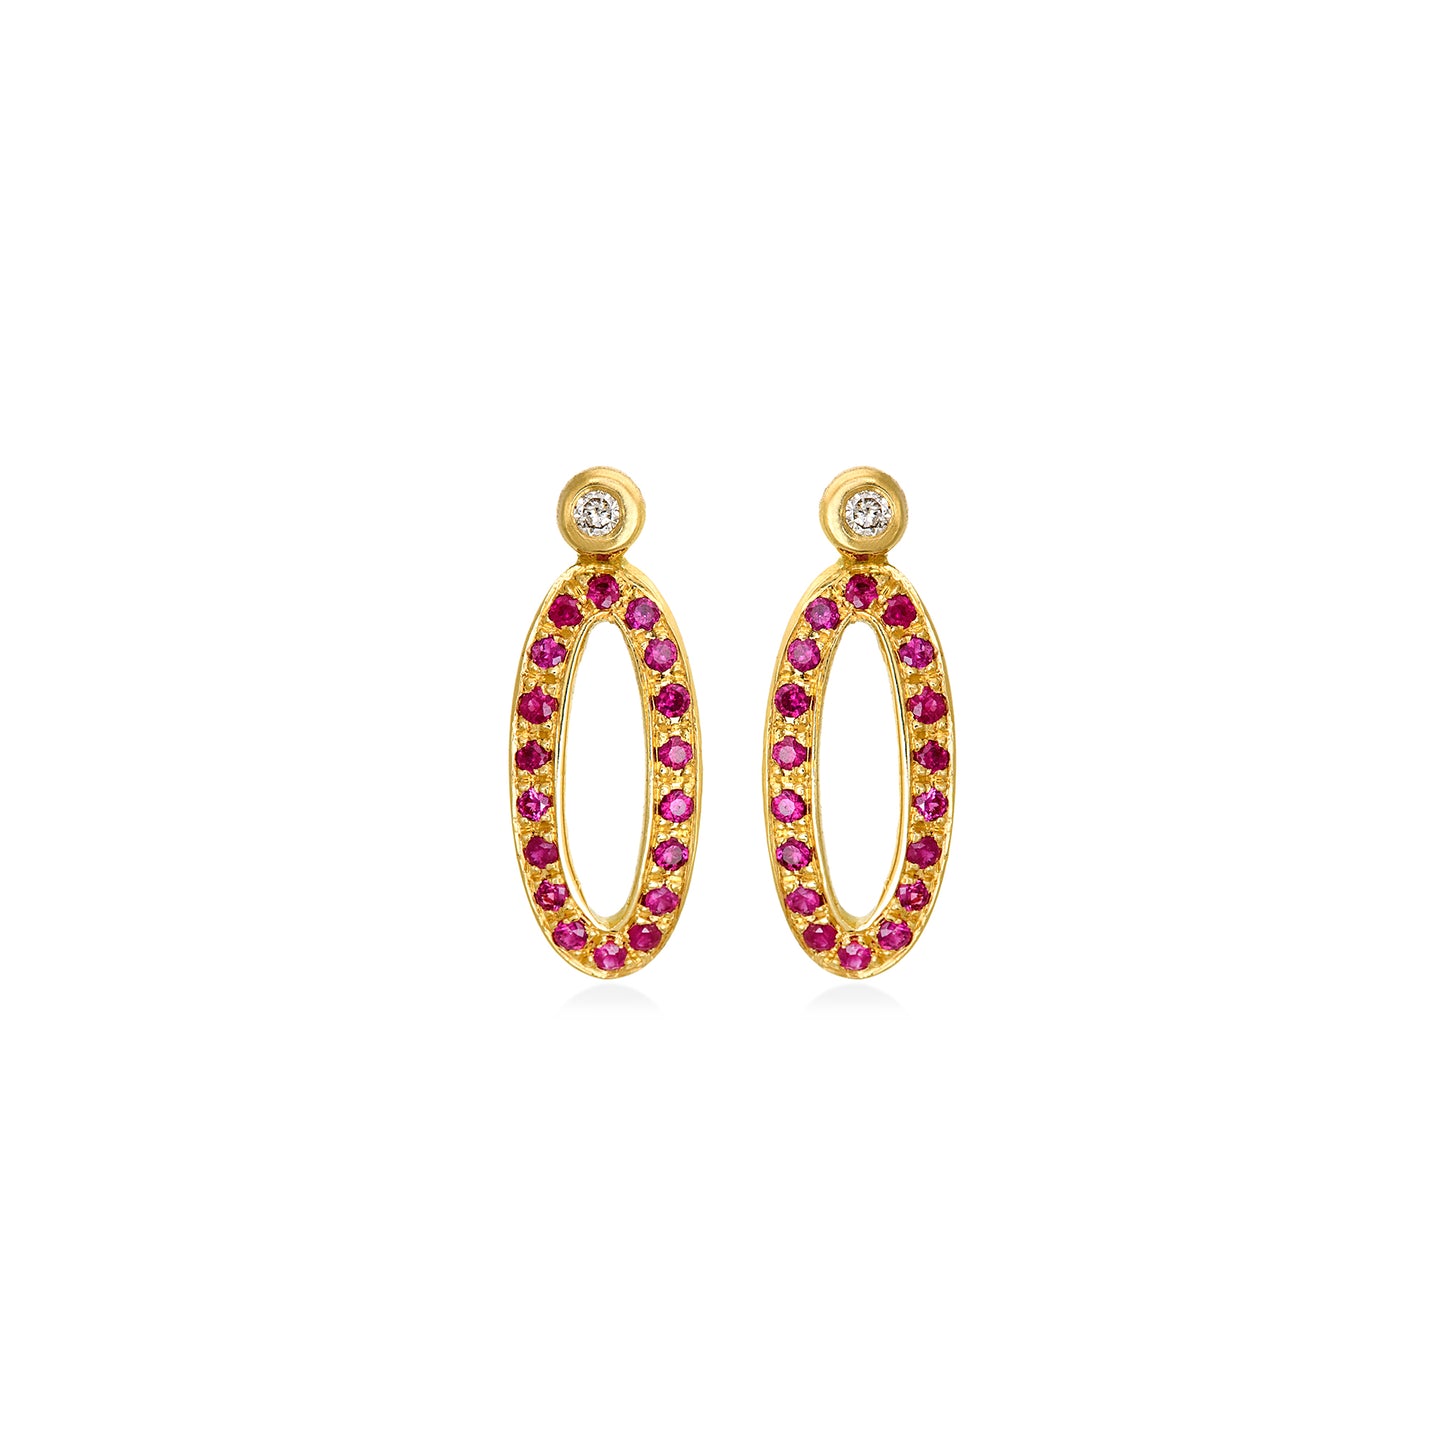 Earrings 18k yellow gold with 0.22carat  rubies  & 0.048carat white diamonds